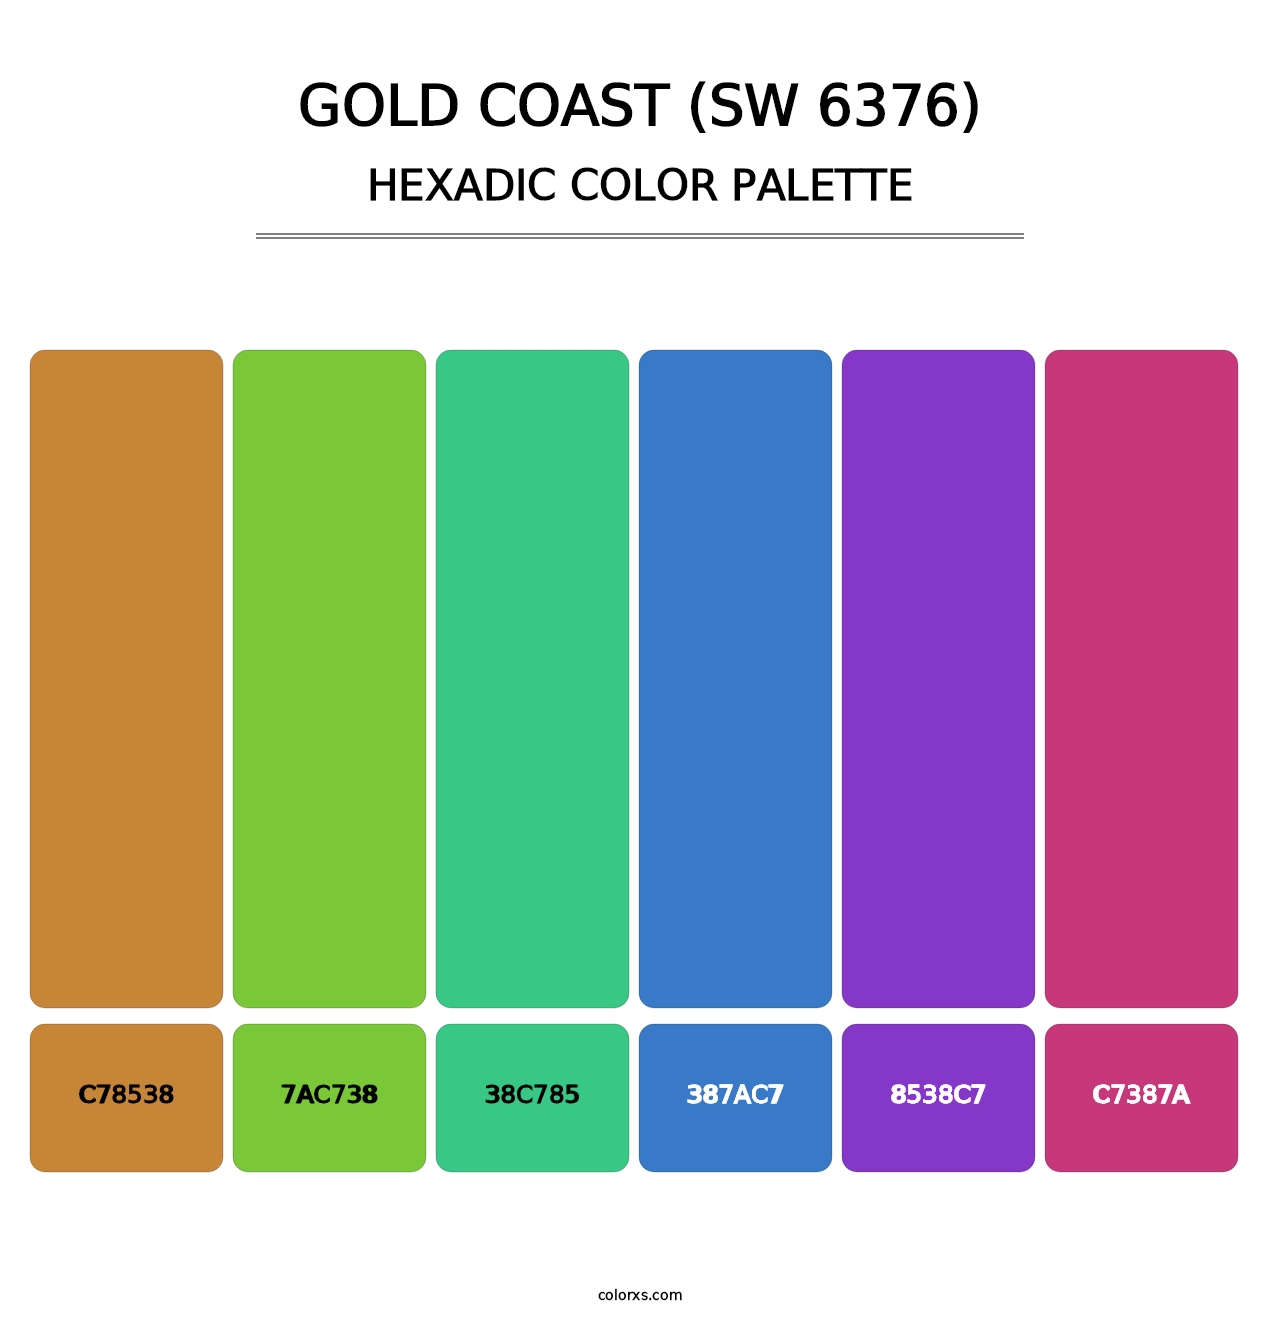 Gold Coast (SW 6376) - Hexadic Color Palette